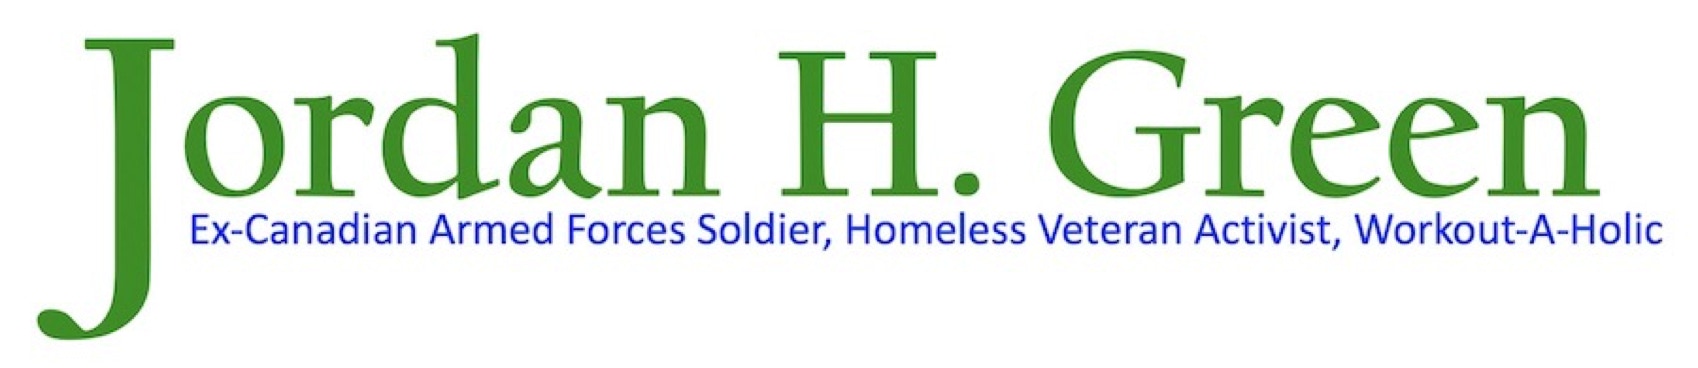 Jordan H. Green banner logo.